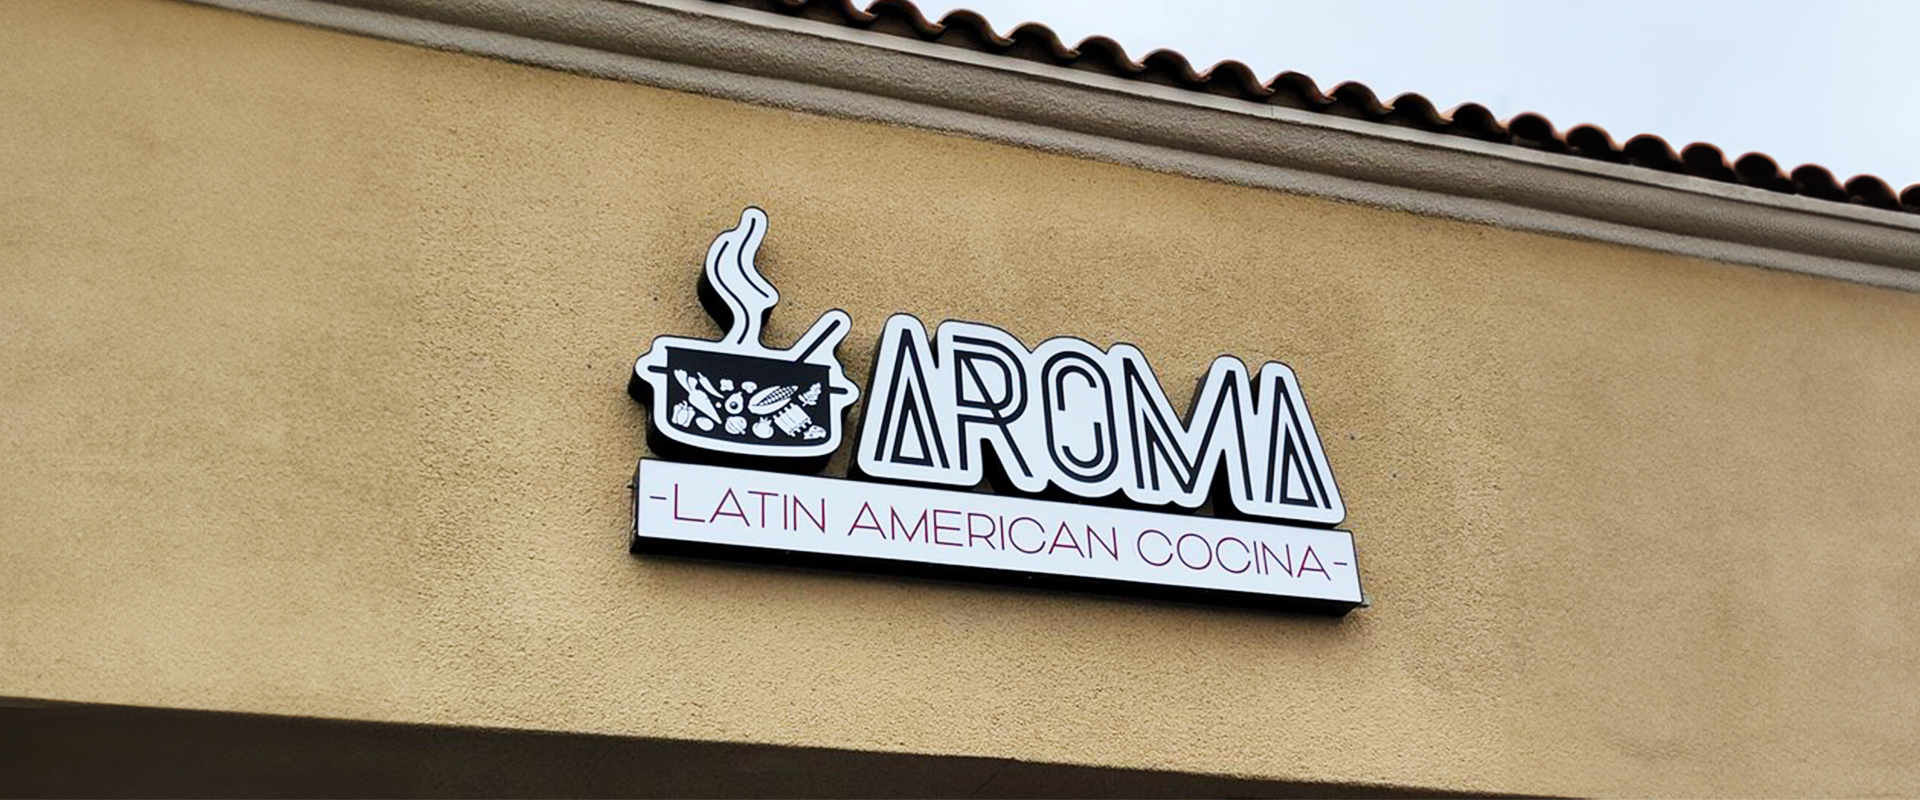 Aroma Latin American Cocina Store Front